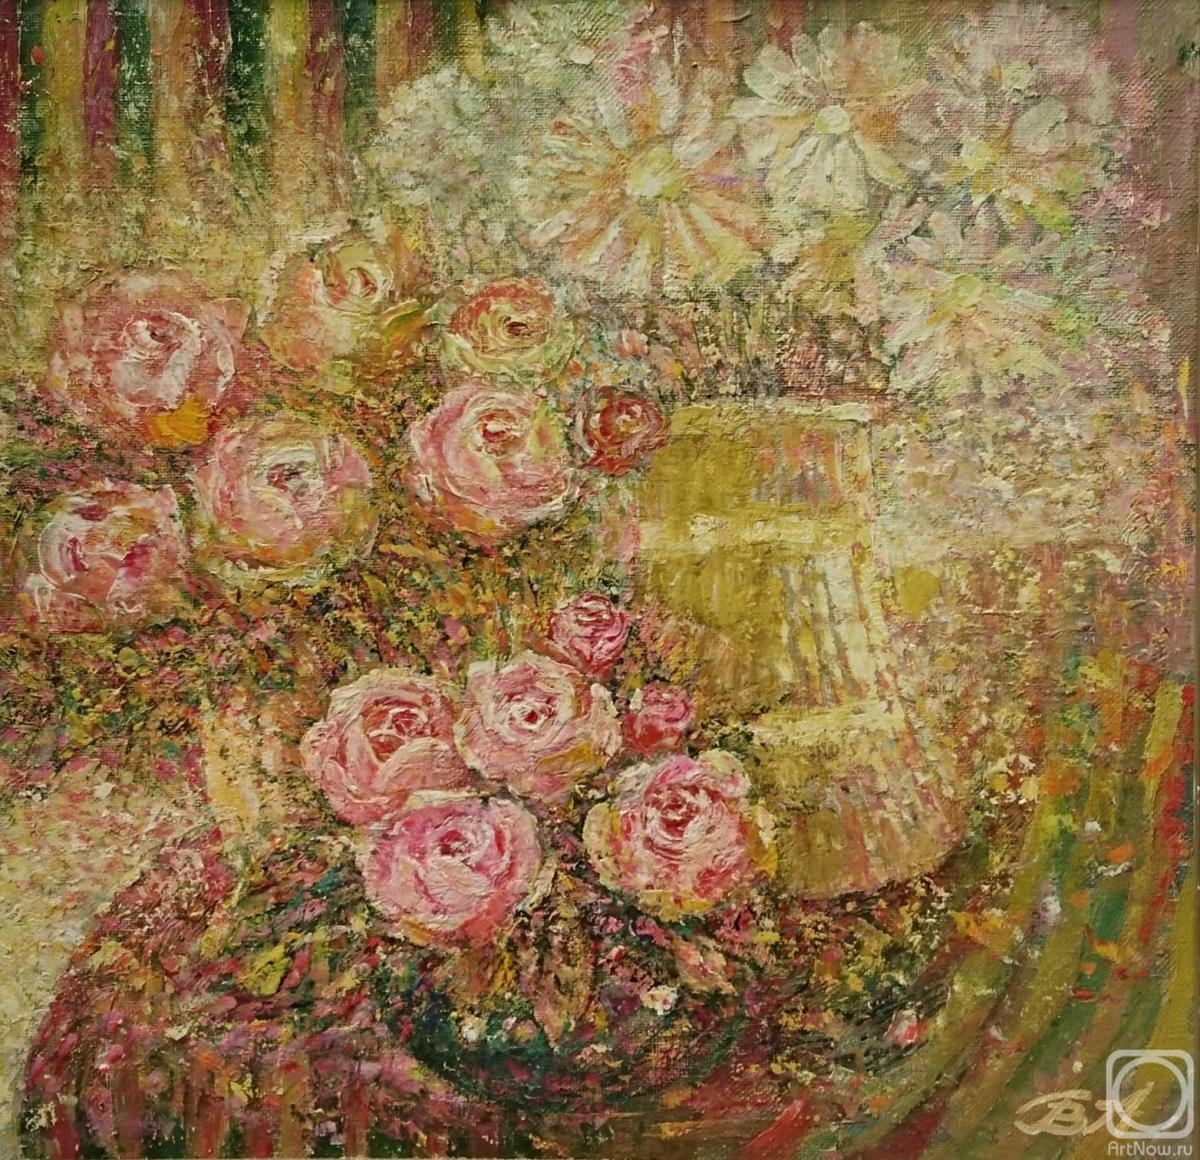 Qorlanov Vladimir. Still life with roses